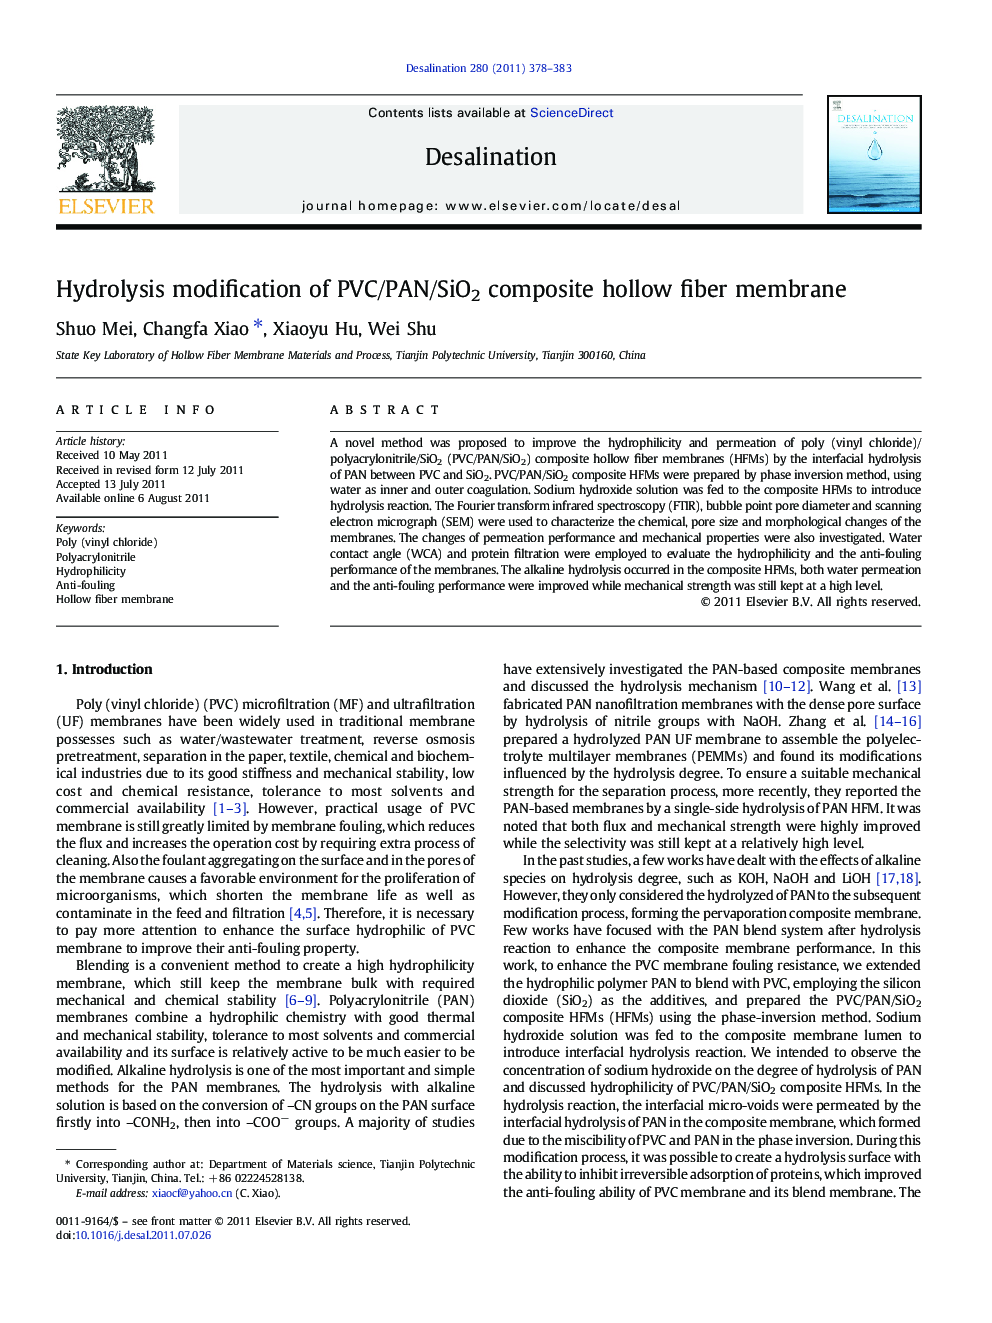 Hydrolysis modification of PVC/PAN/SiO2 composite hollow fiber membrane